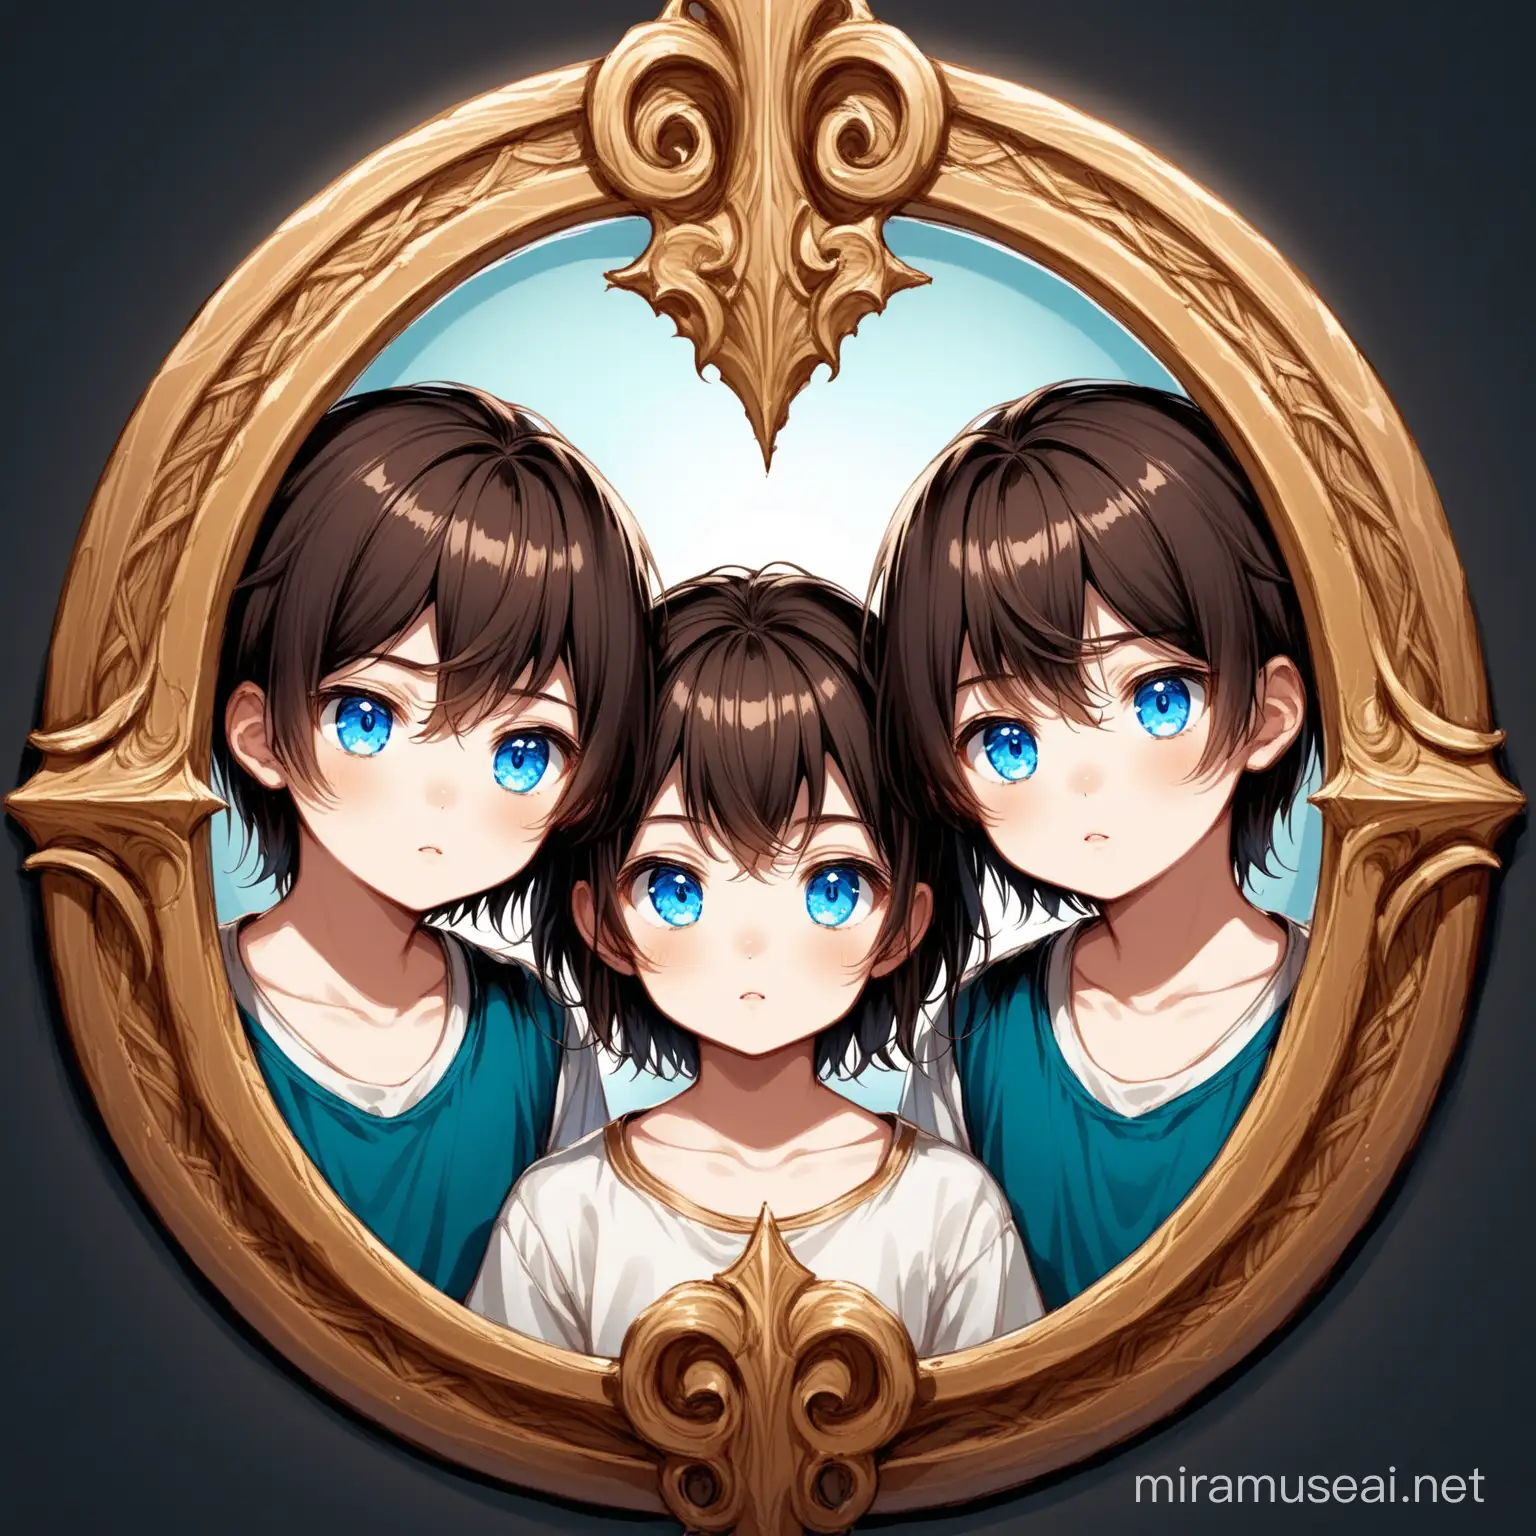 Identical Twin Children Reflecting in Ancient Mirror